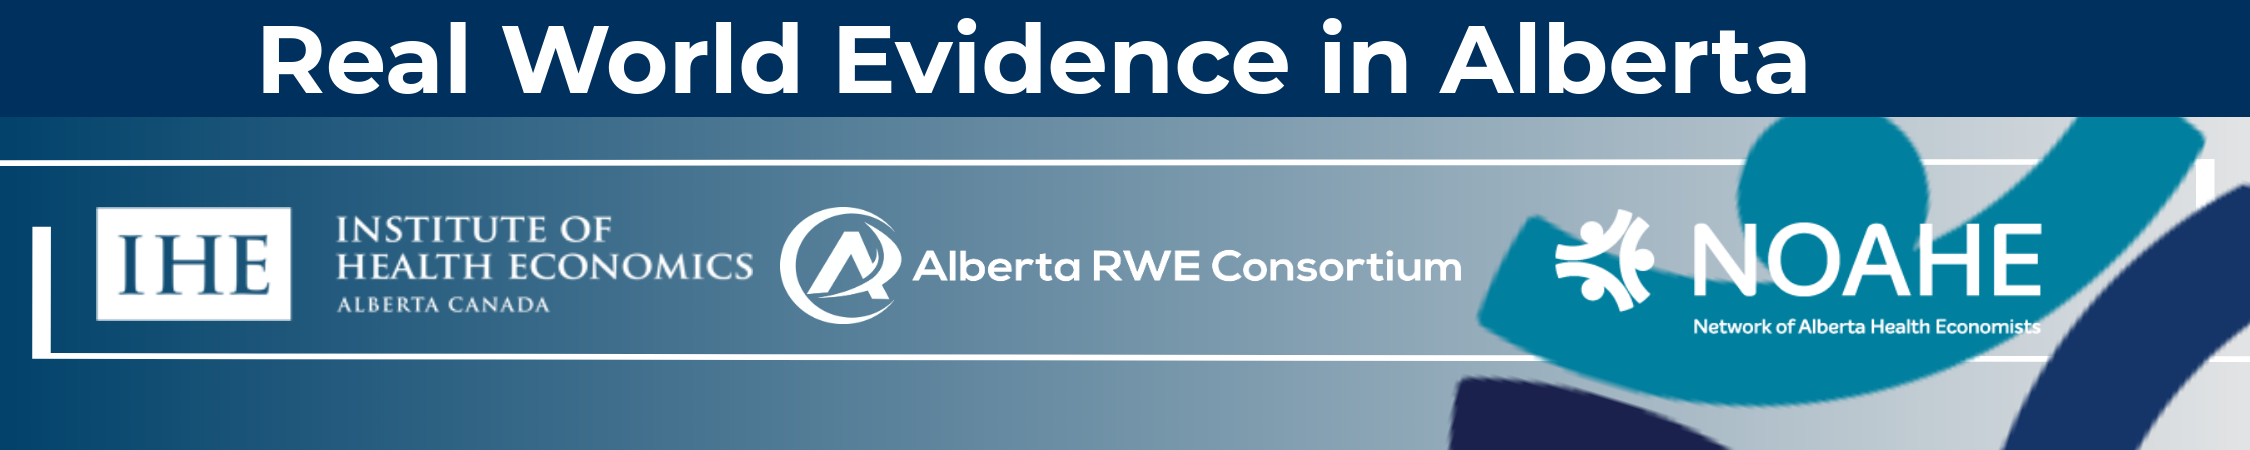 Real World Evidence in Alberta 